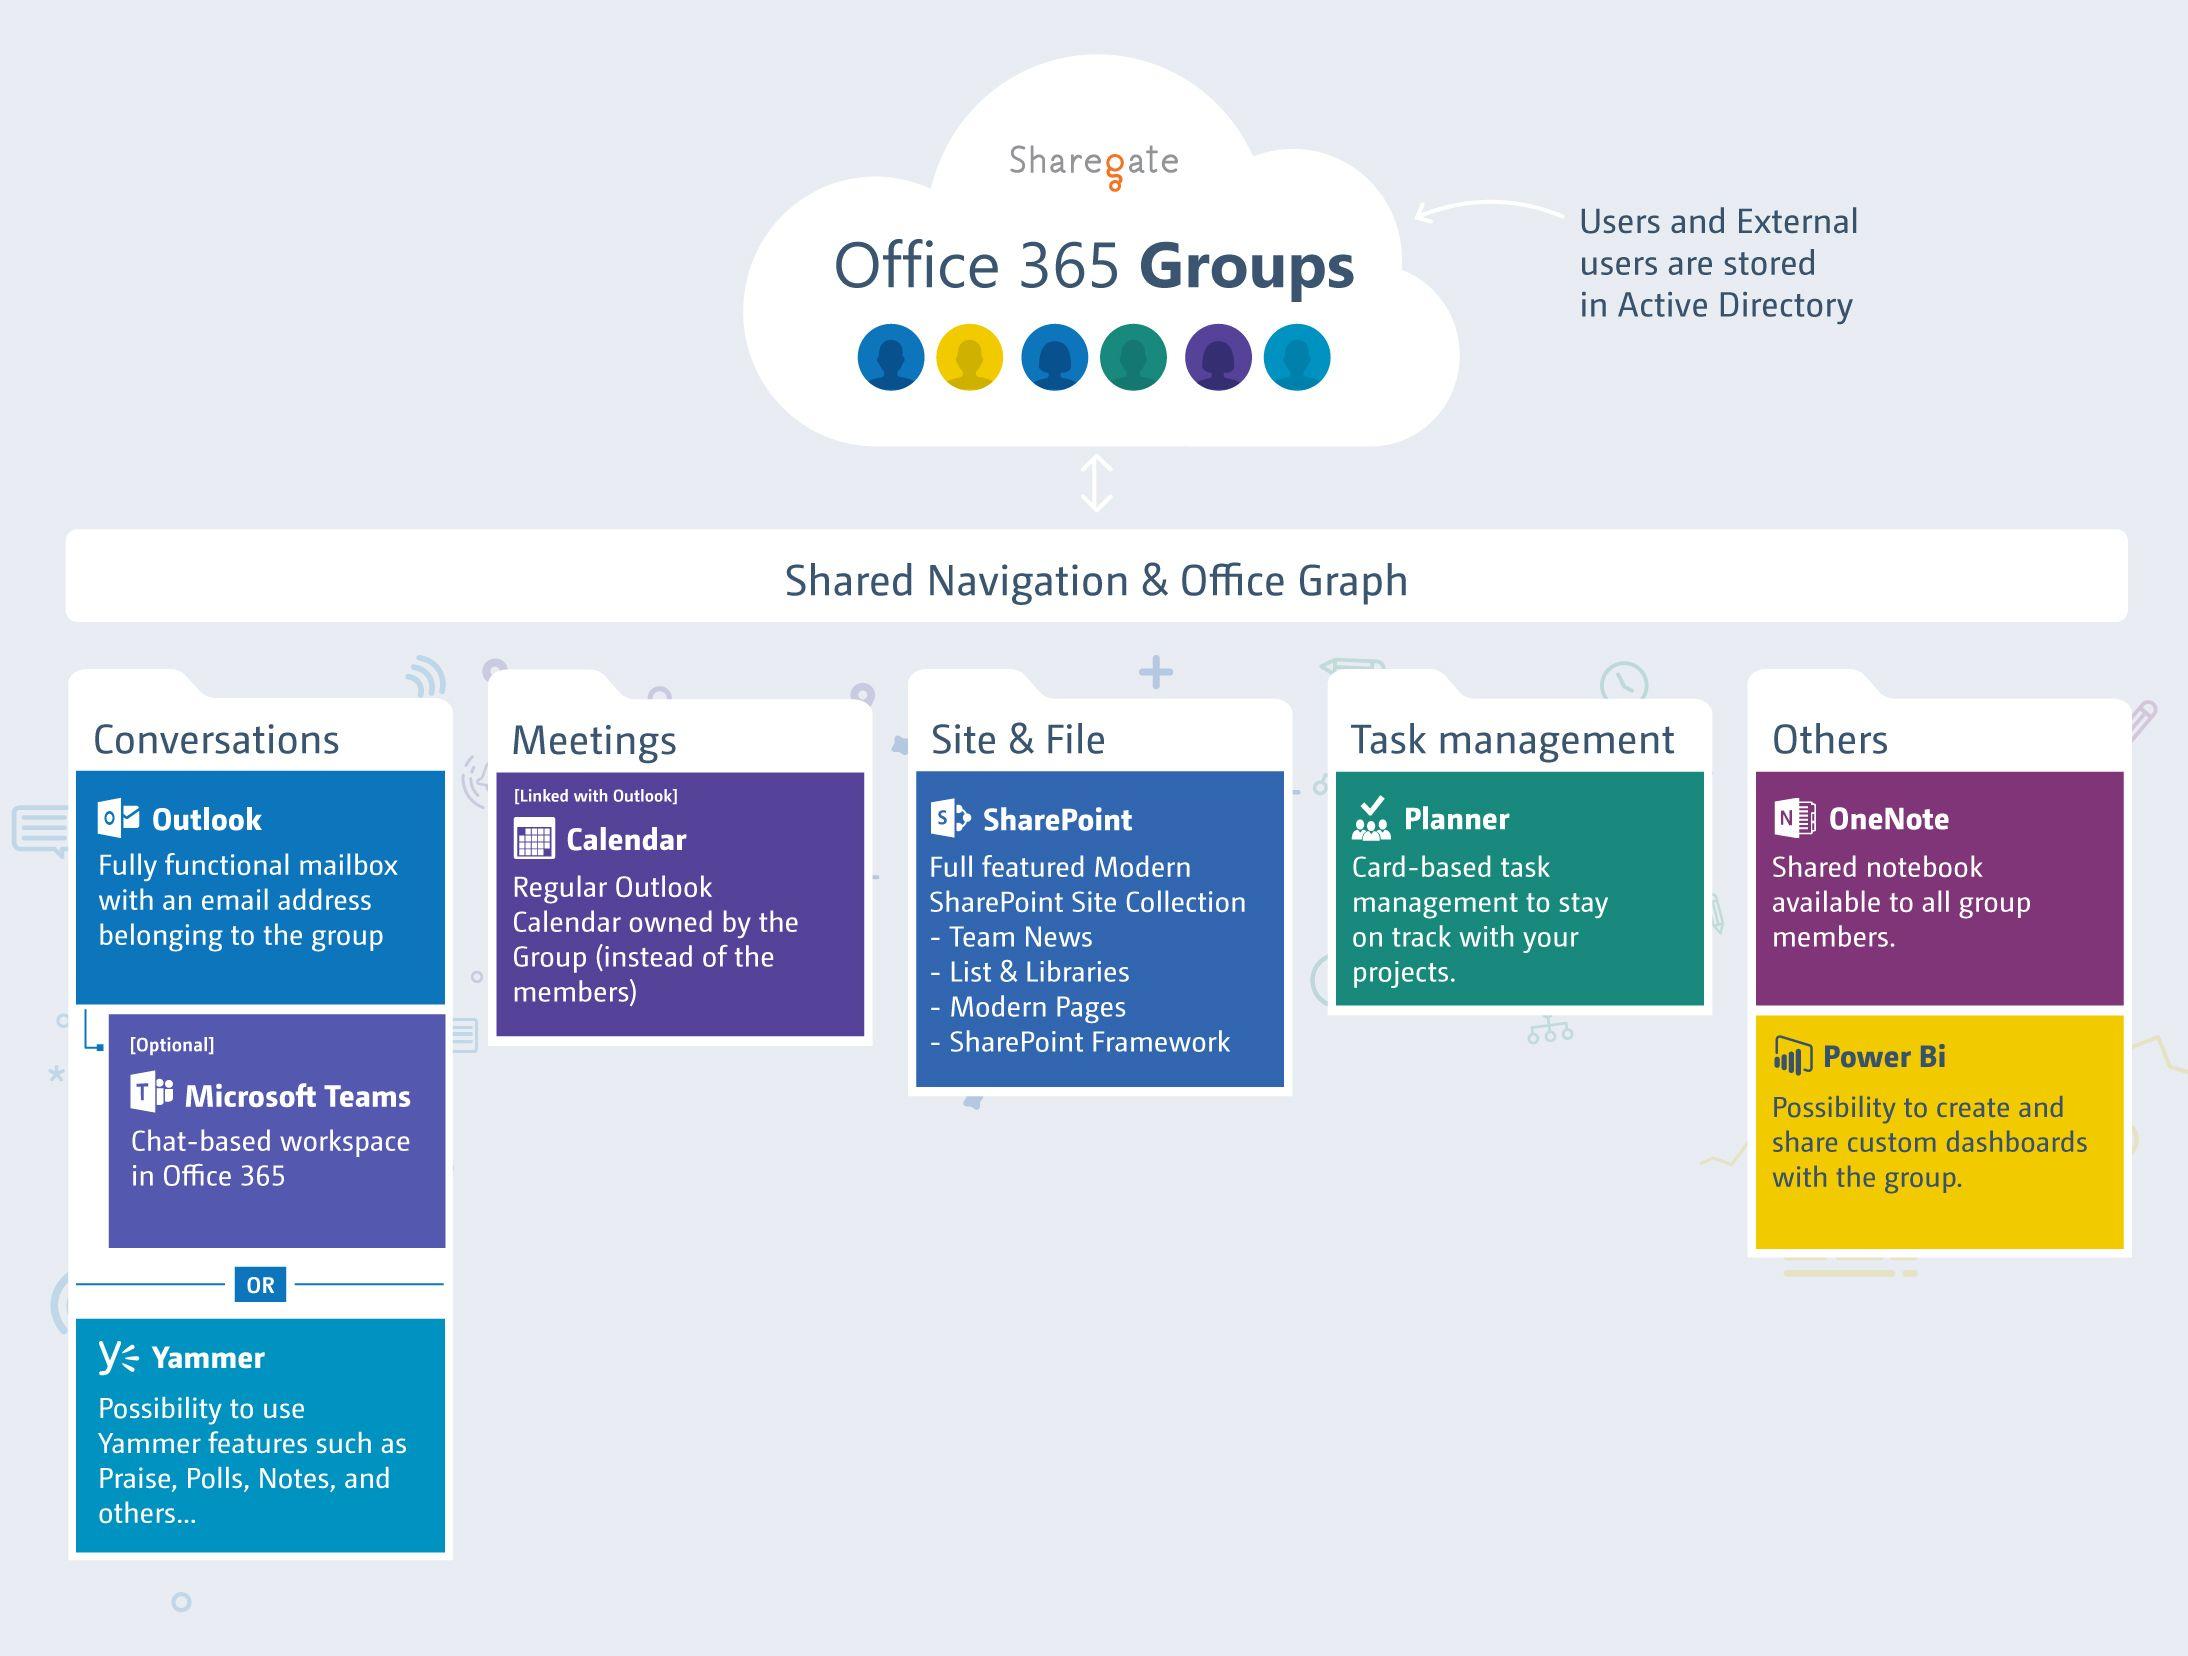 Microsoft Office 365 SharePoint Logo - Office 365 Groups, explained - ShareGate